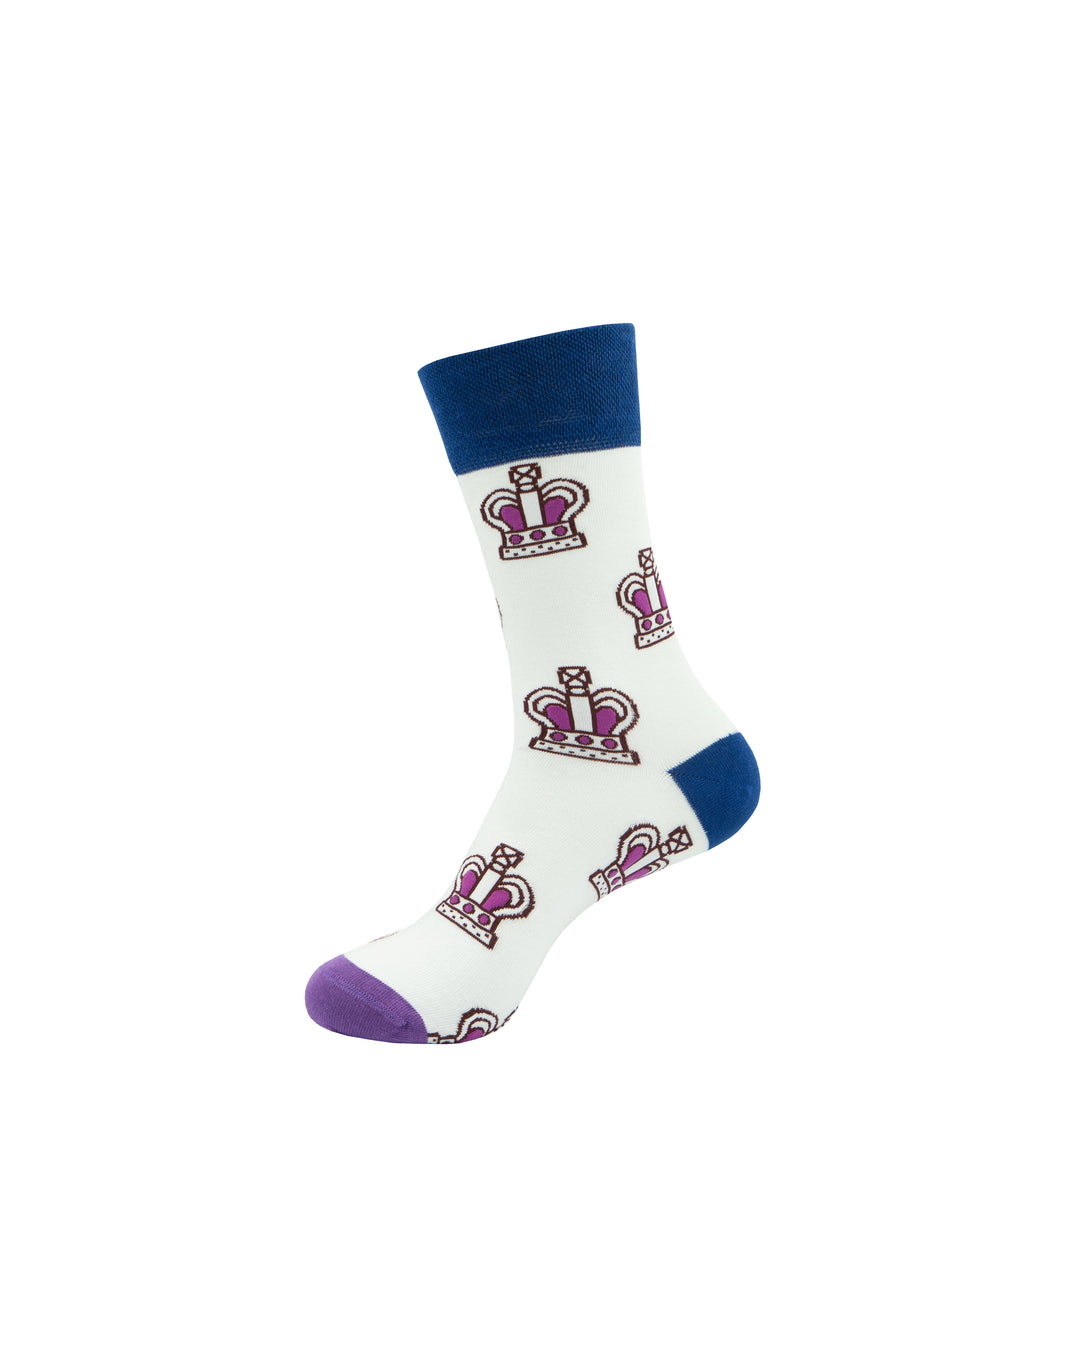 King Charles Coronation Socks - 3 pairs Luxury Sock Gift Box